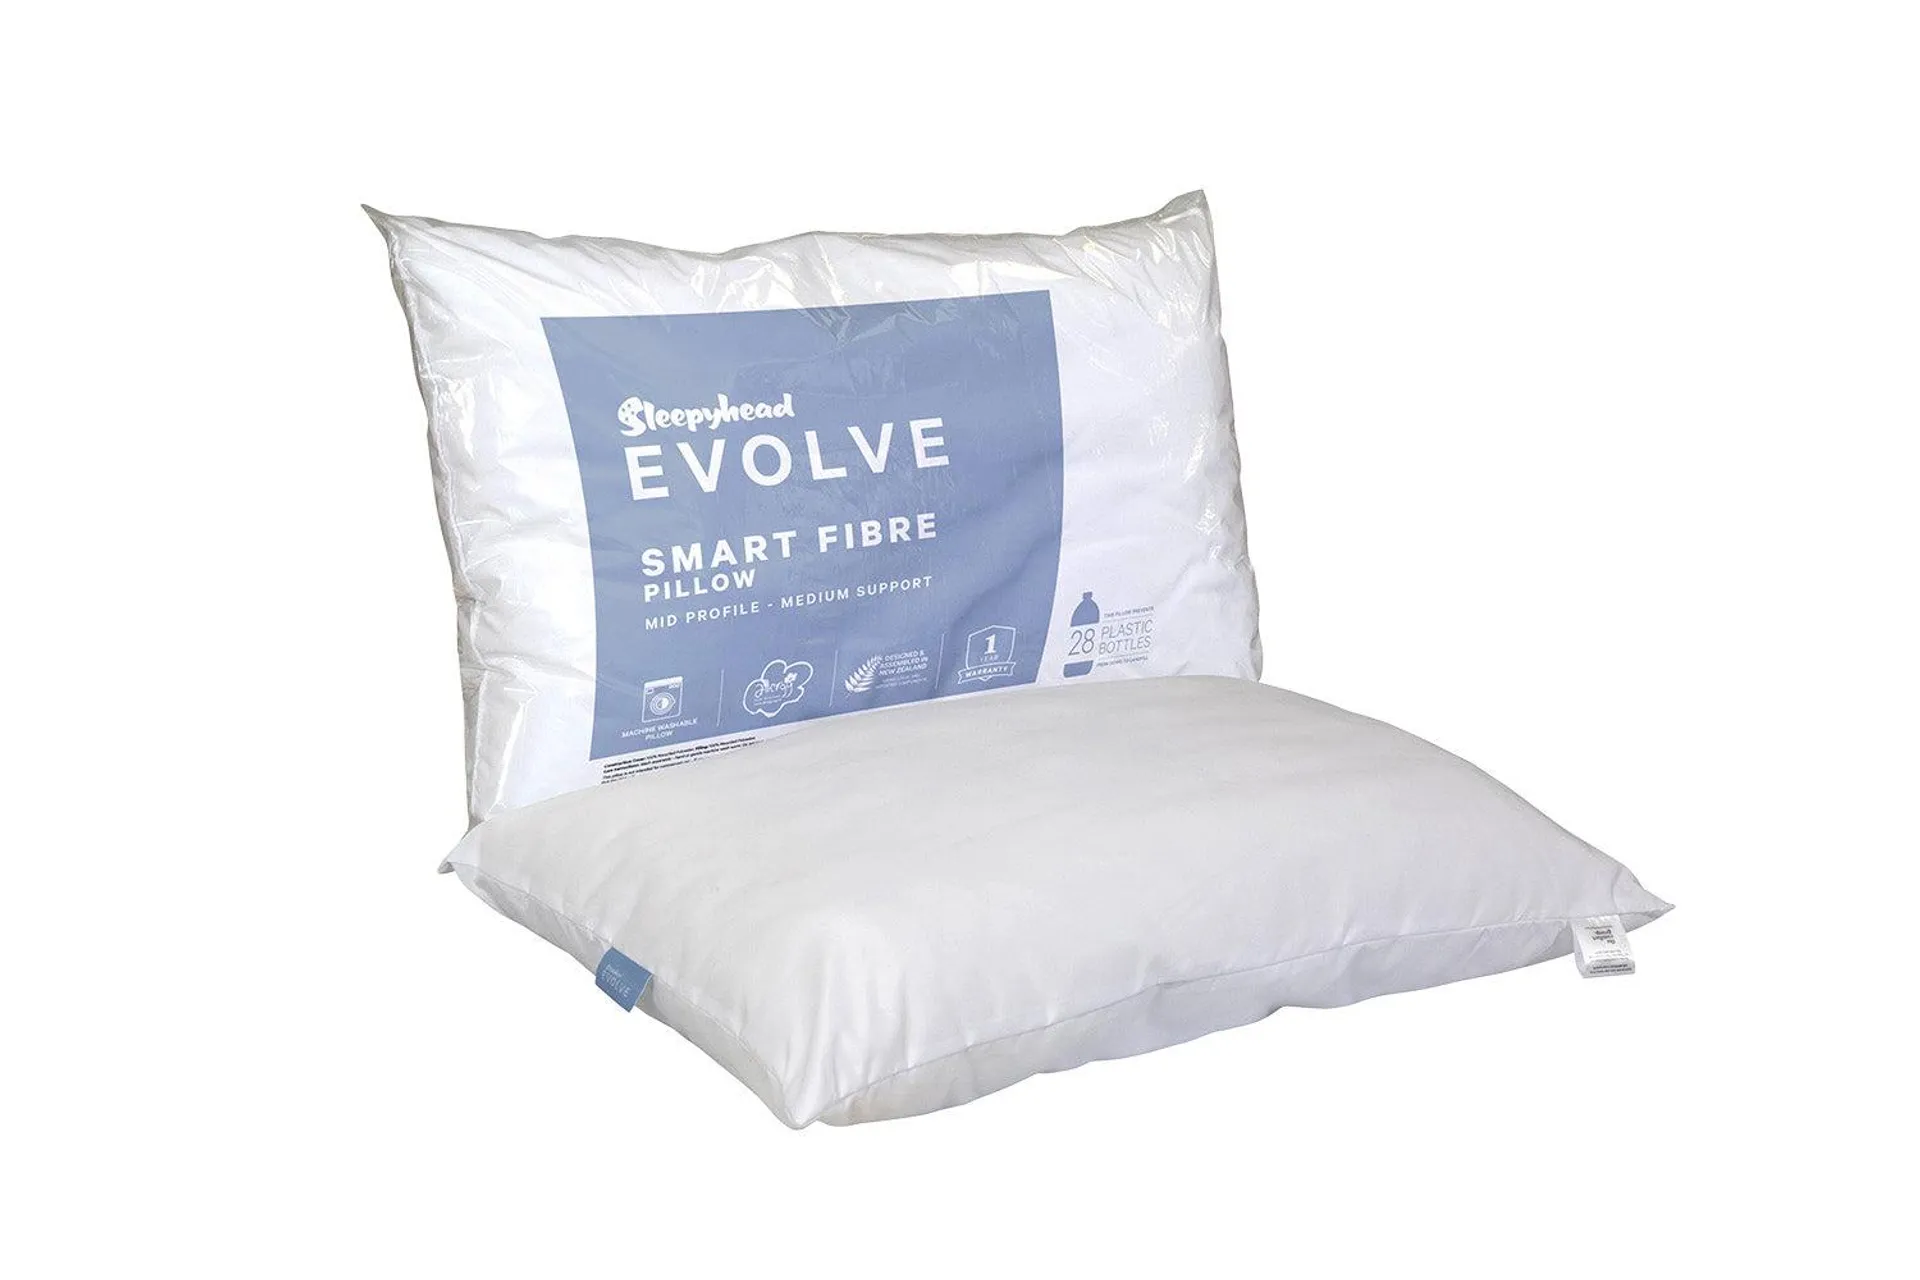 Sleepyhead Evolve Smart Fibre Mid Profile Medium Support Pillow